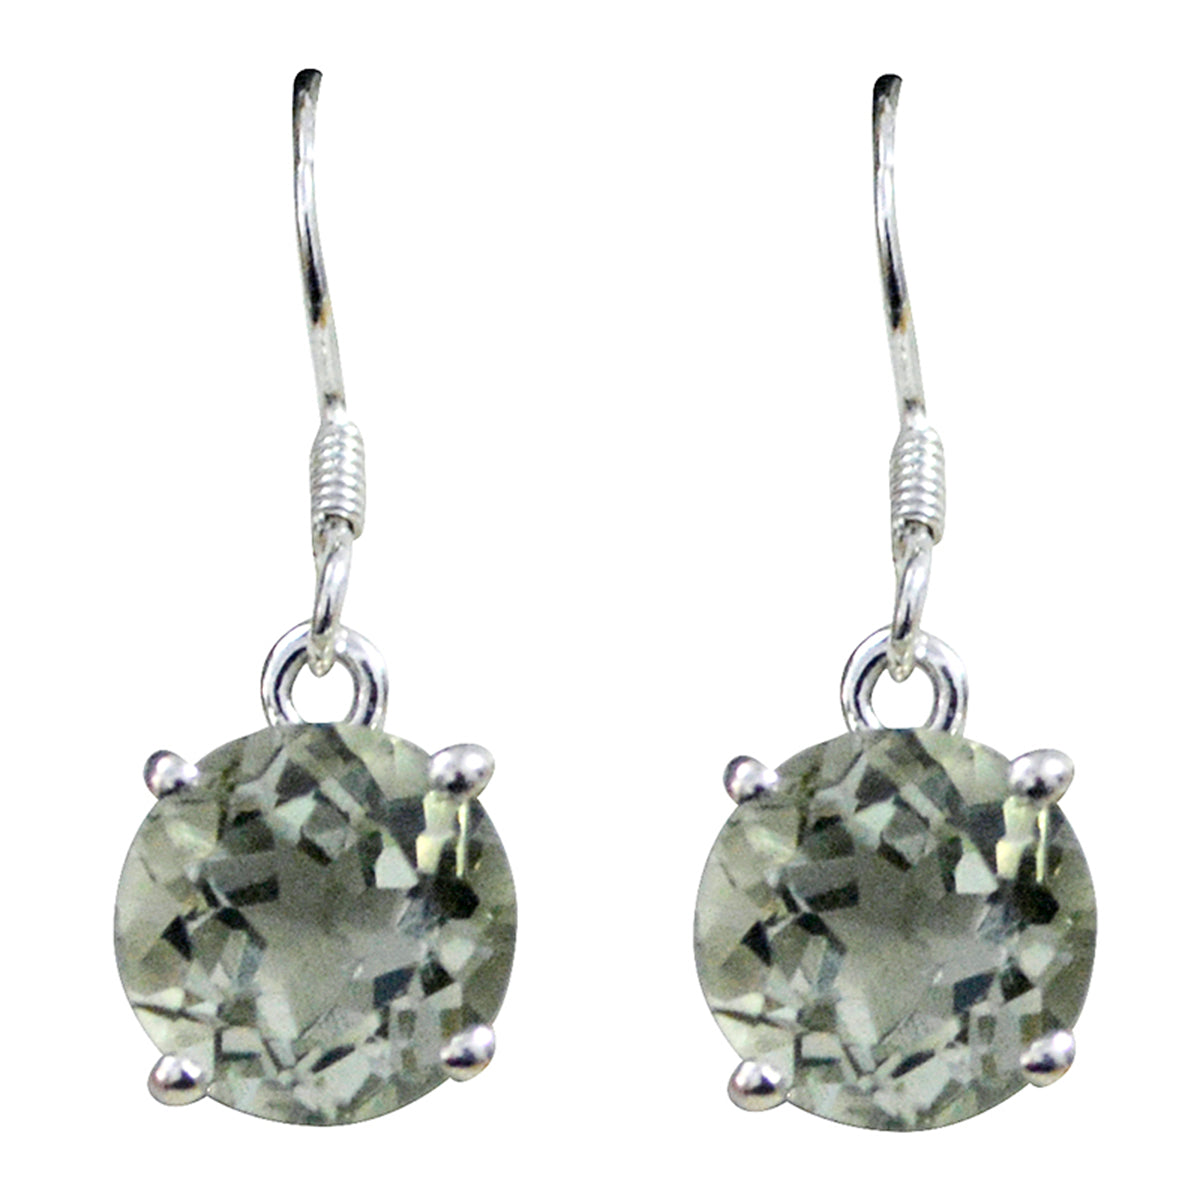 Riyo Real Gemstones round Faceted Green Amethyst Silver Earrings mom birthday gift